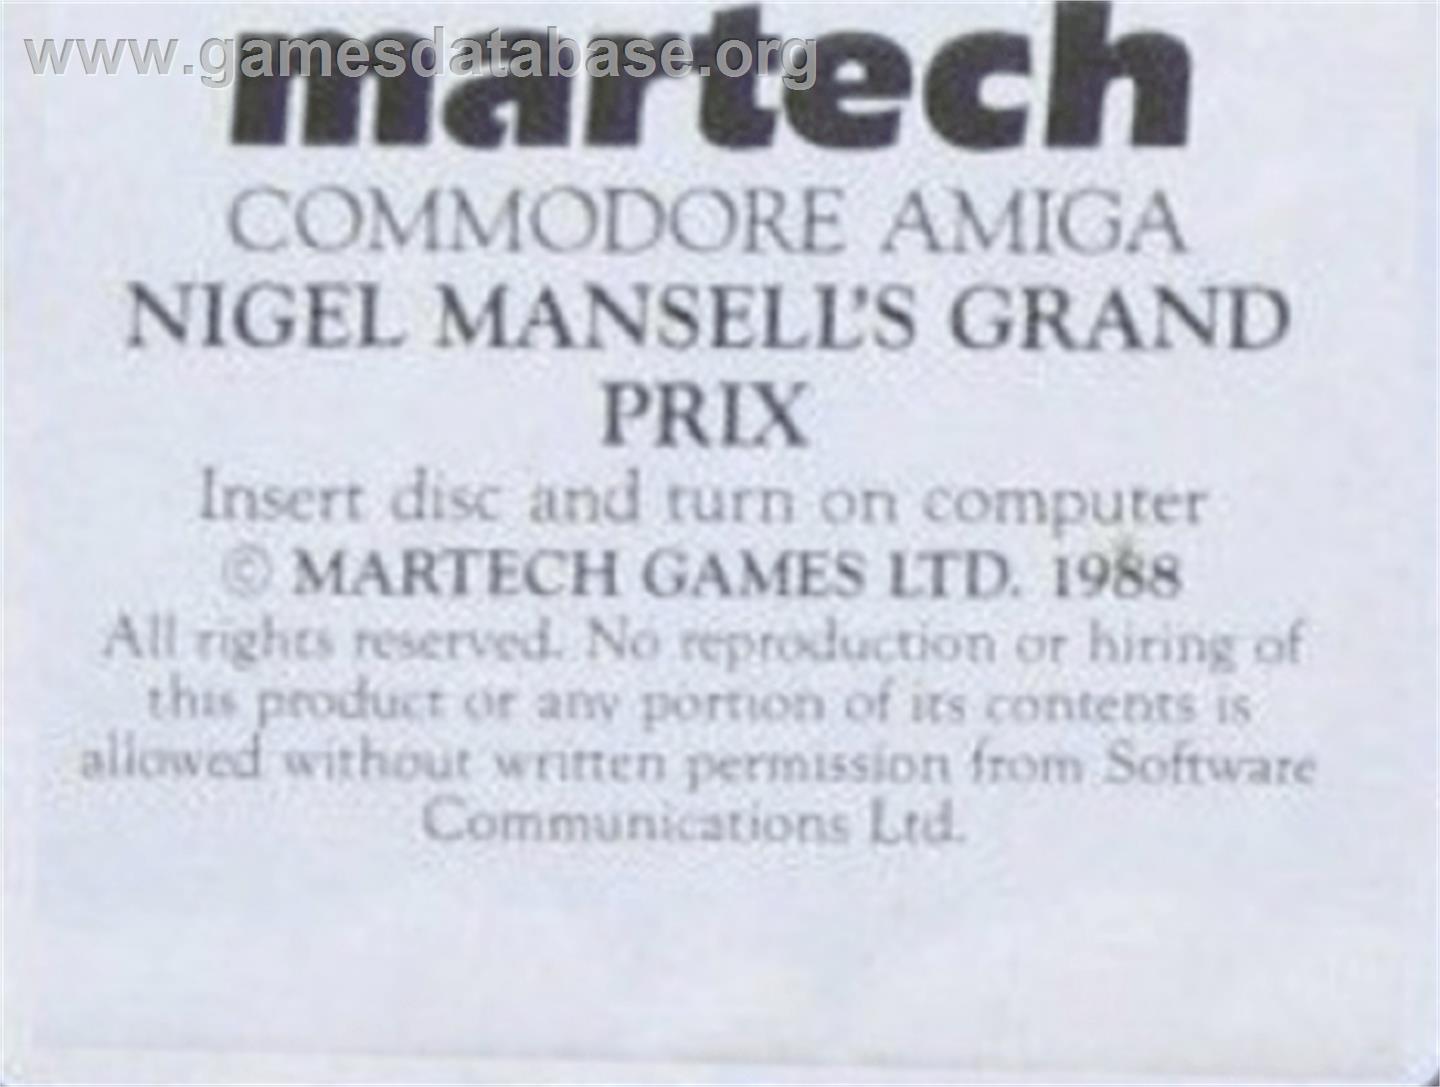 Nigel Mansell's Grand Prix - Commodore Amiga - Artwork - Cartridge Top